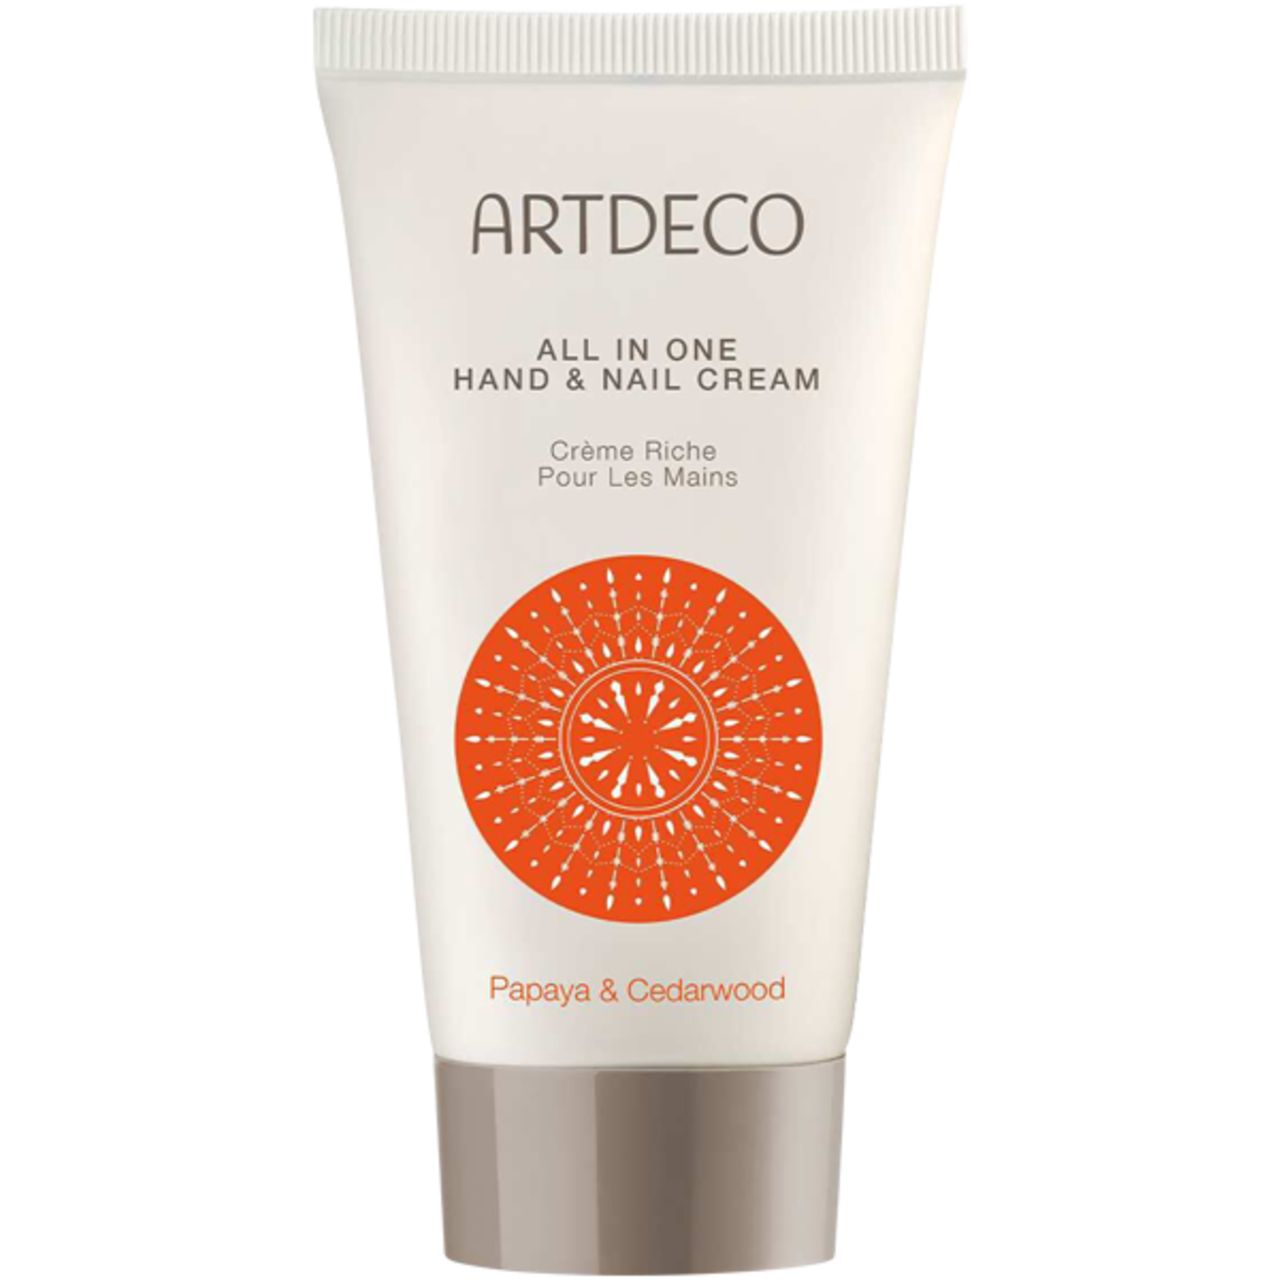 Artdeco, All in One Hand & Nail Cream